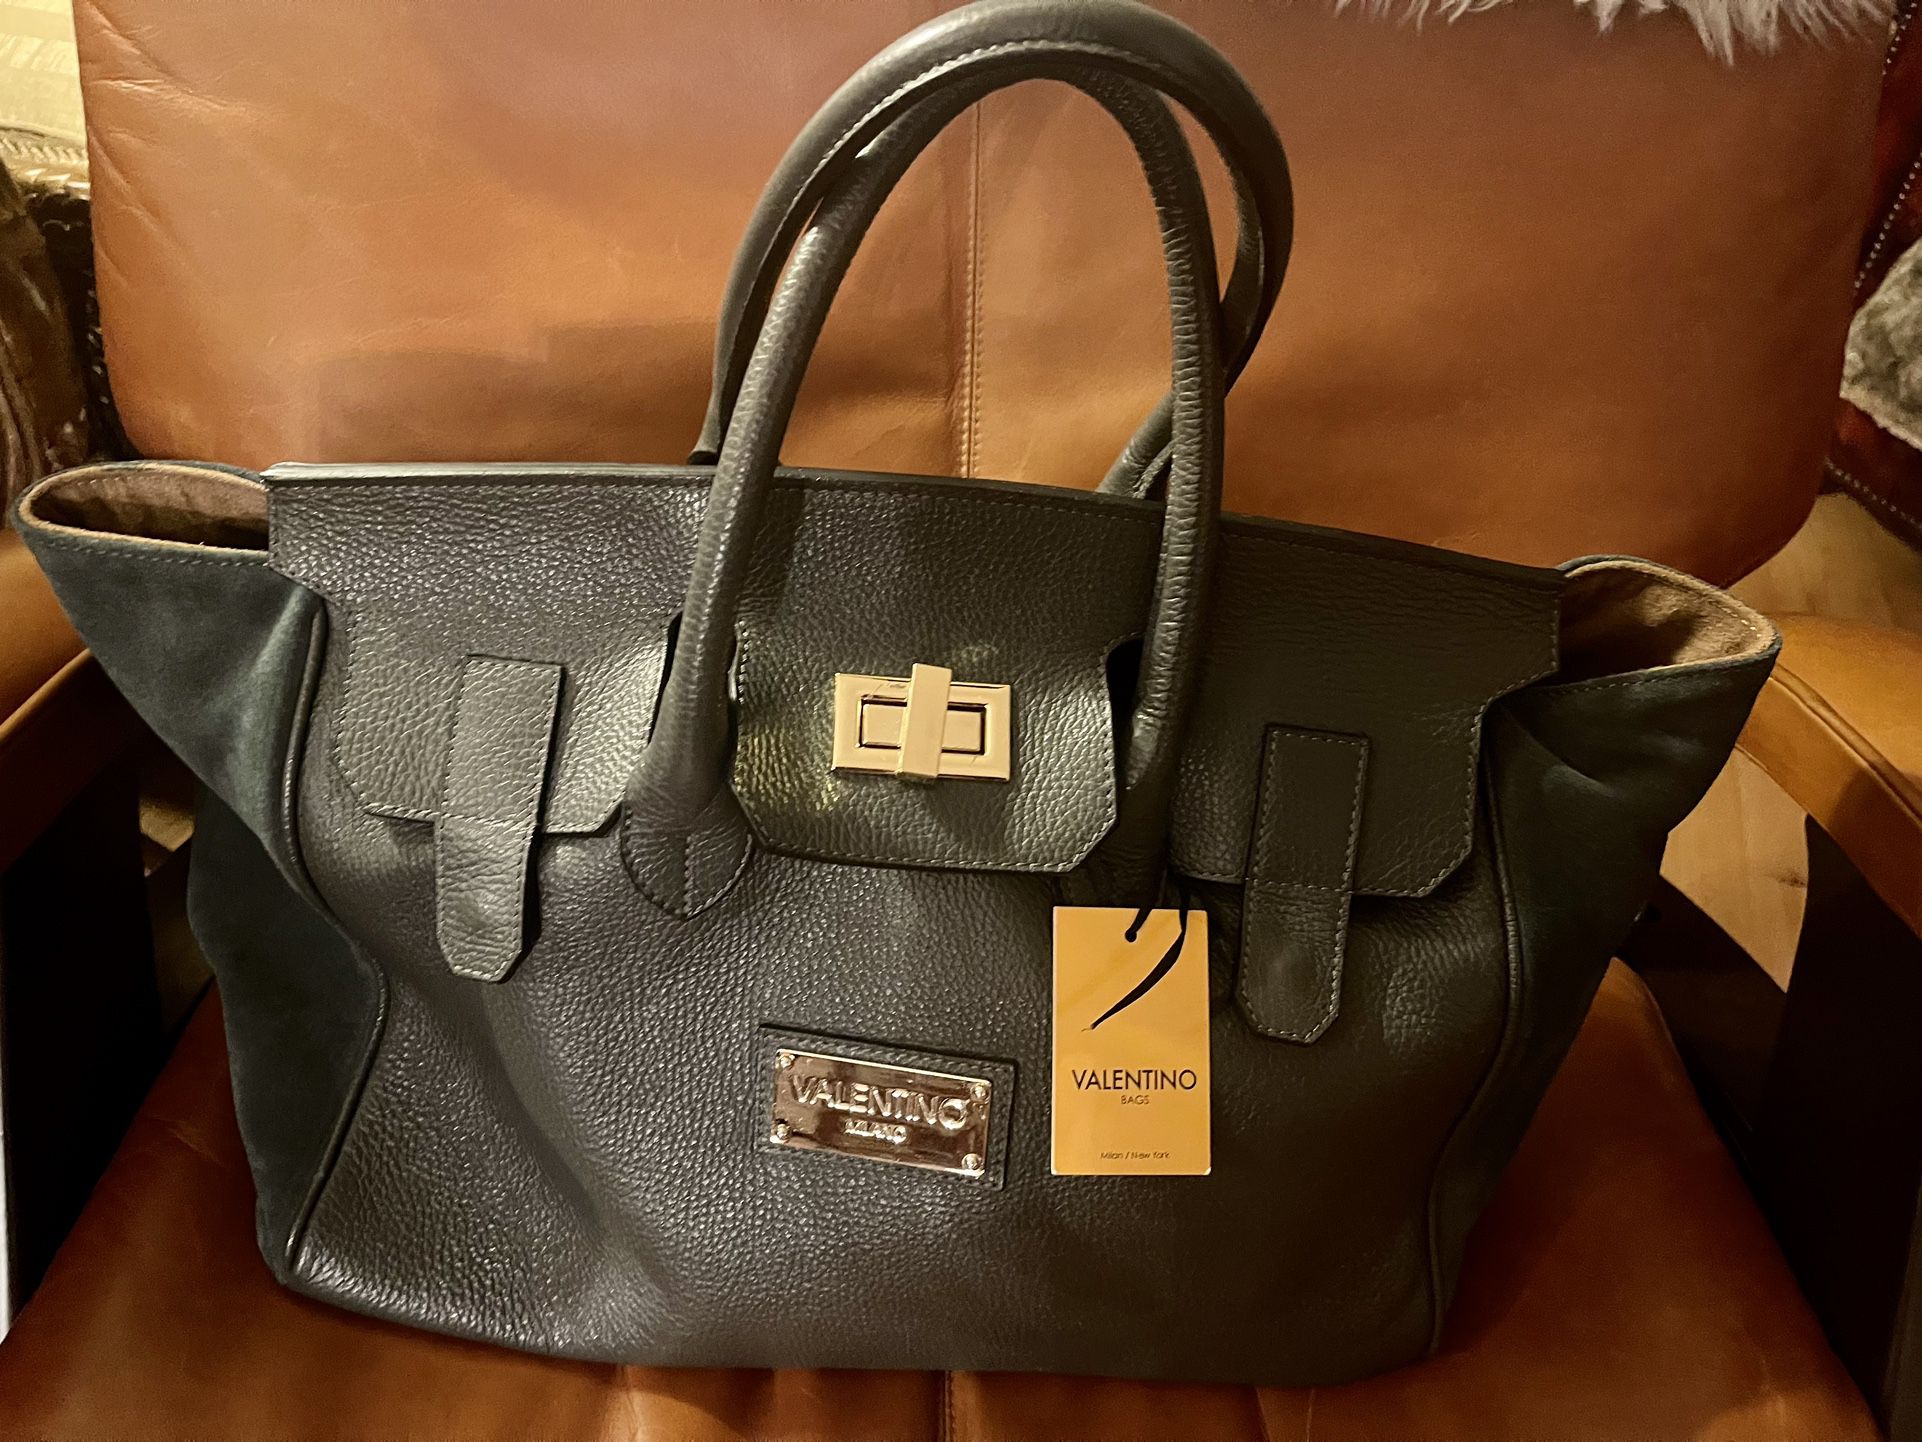 Valentino handbag $300 for Sale in - OfferUp